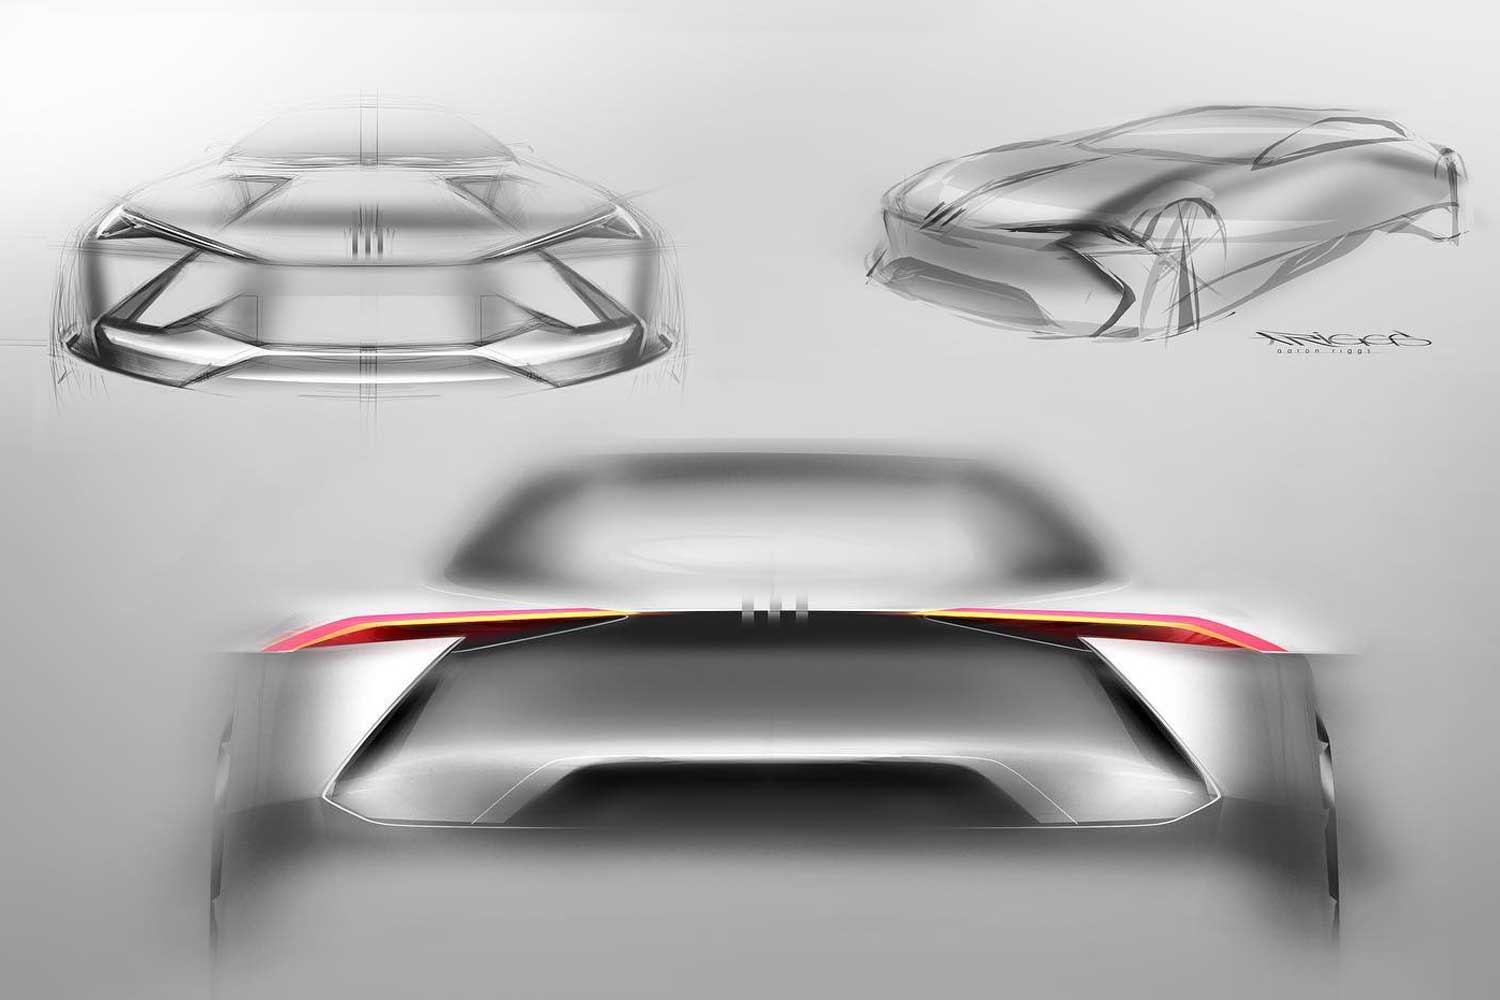 Pro Designer Secret to Better Car Design Sketches Right Now! - YouTube